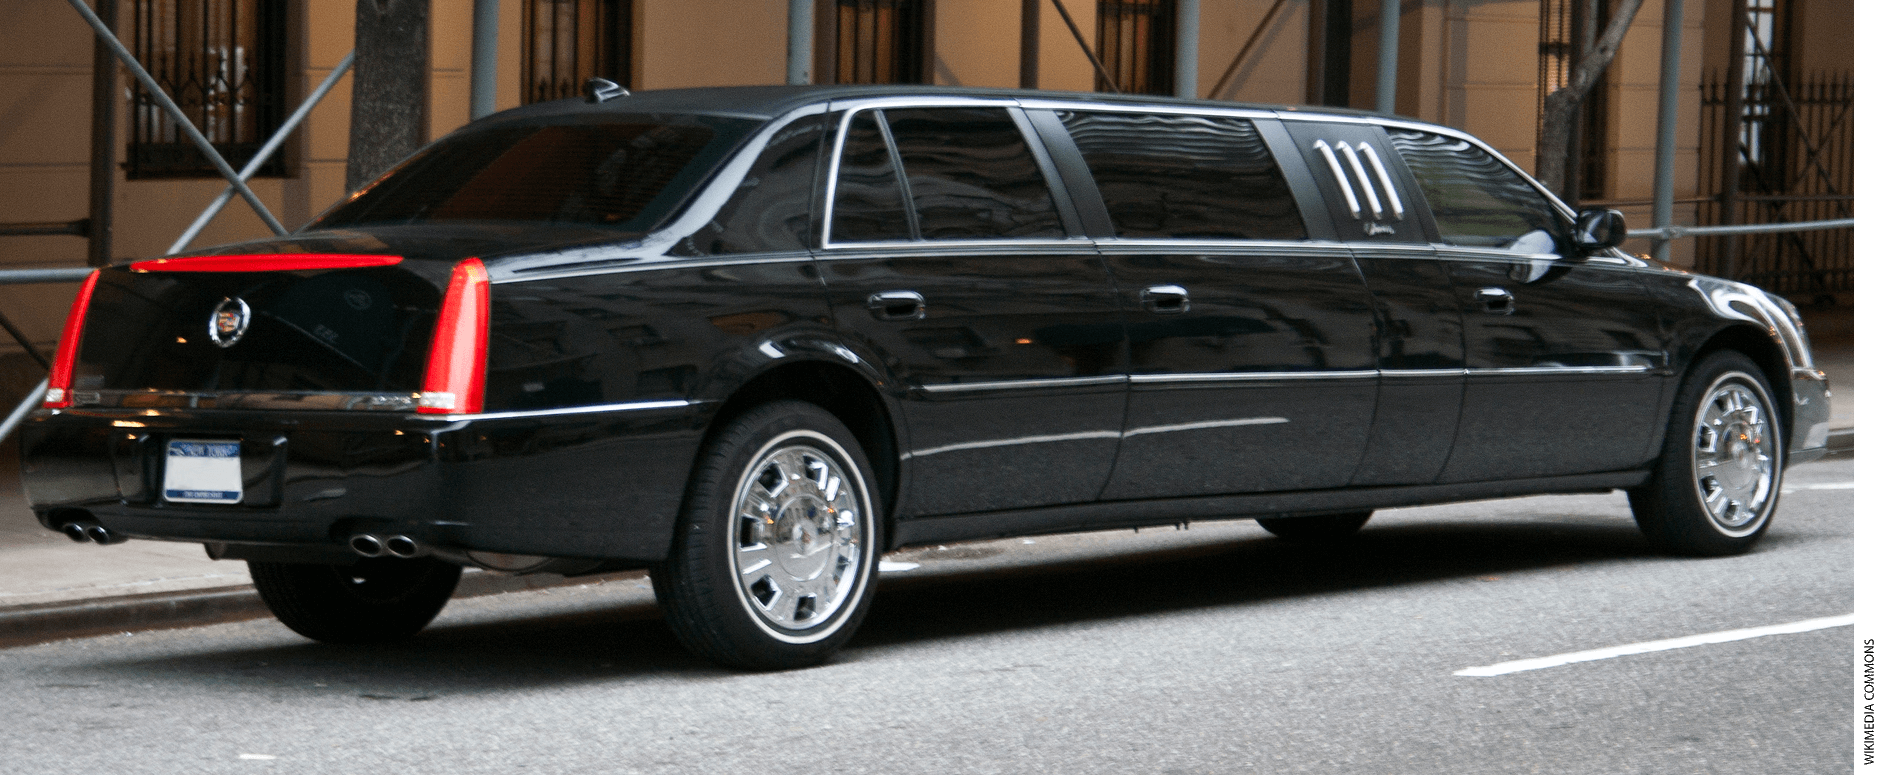 Photo of a black stretch limousine